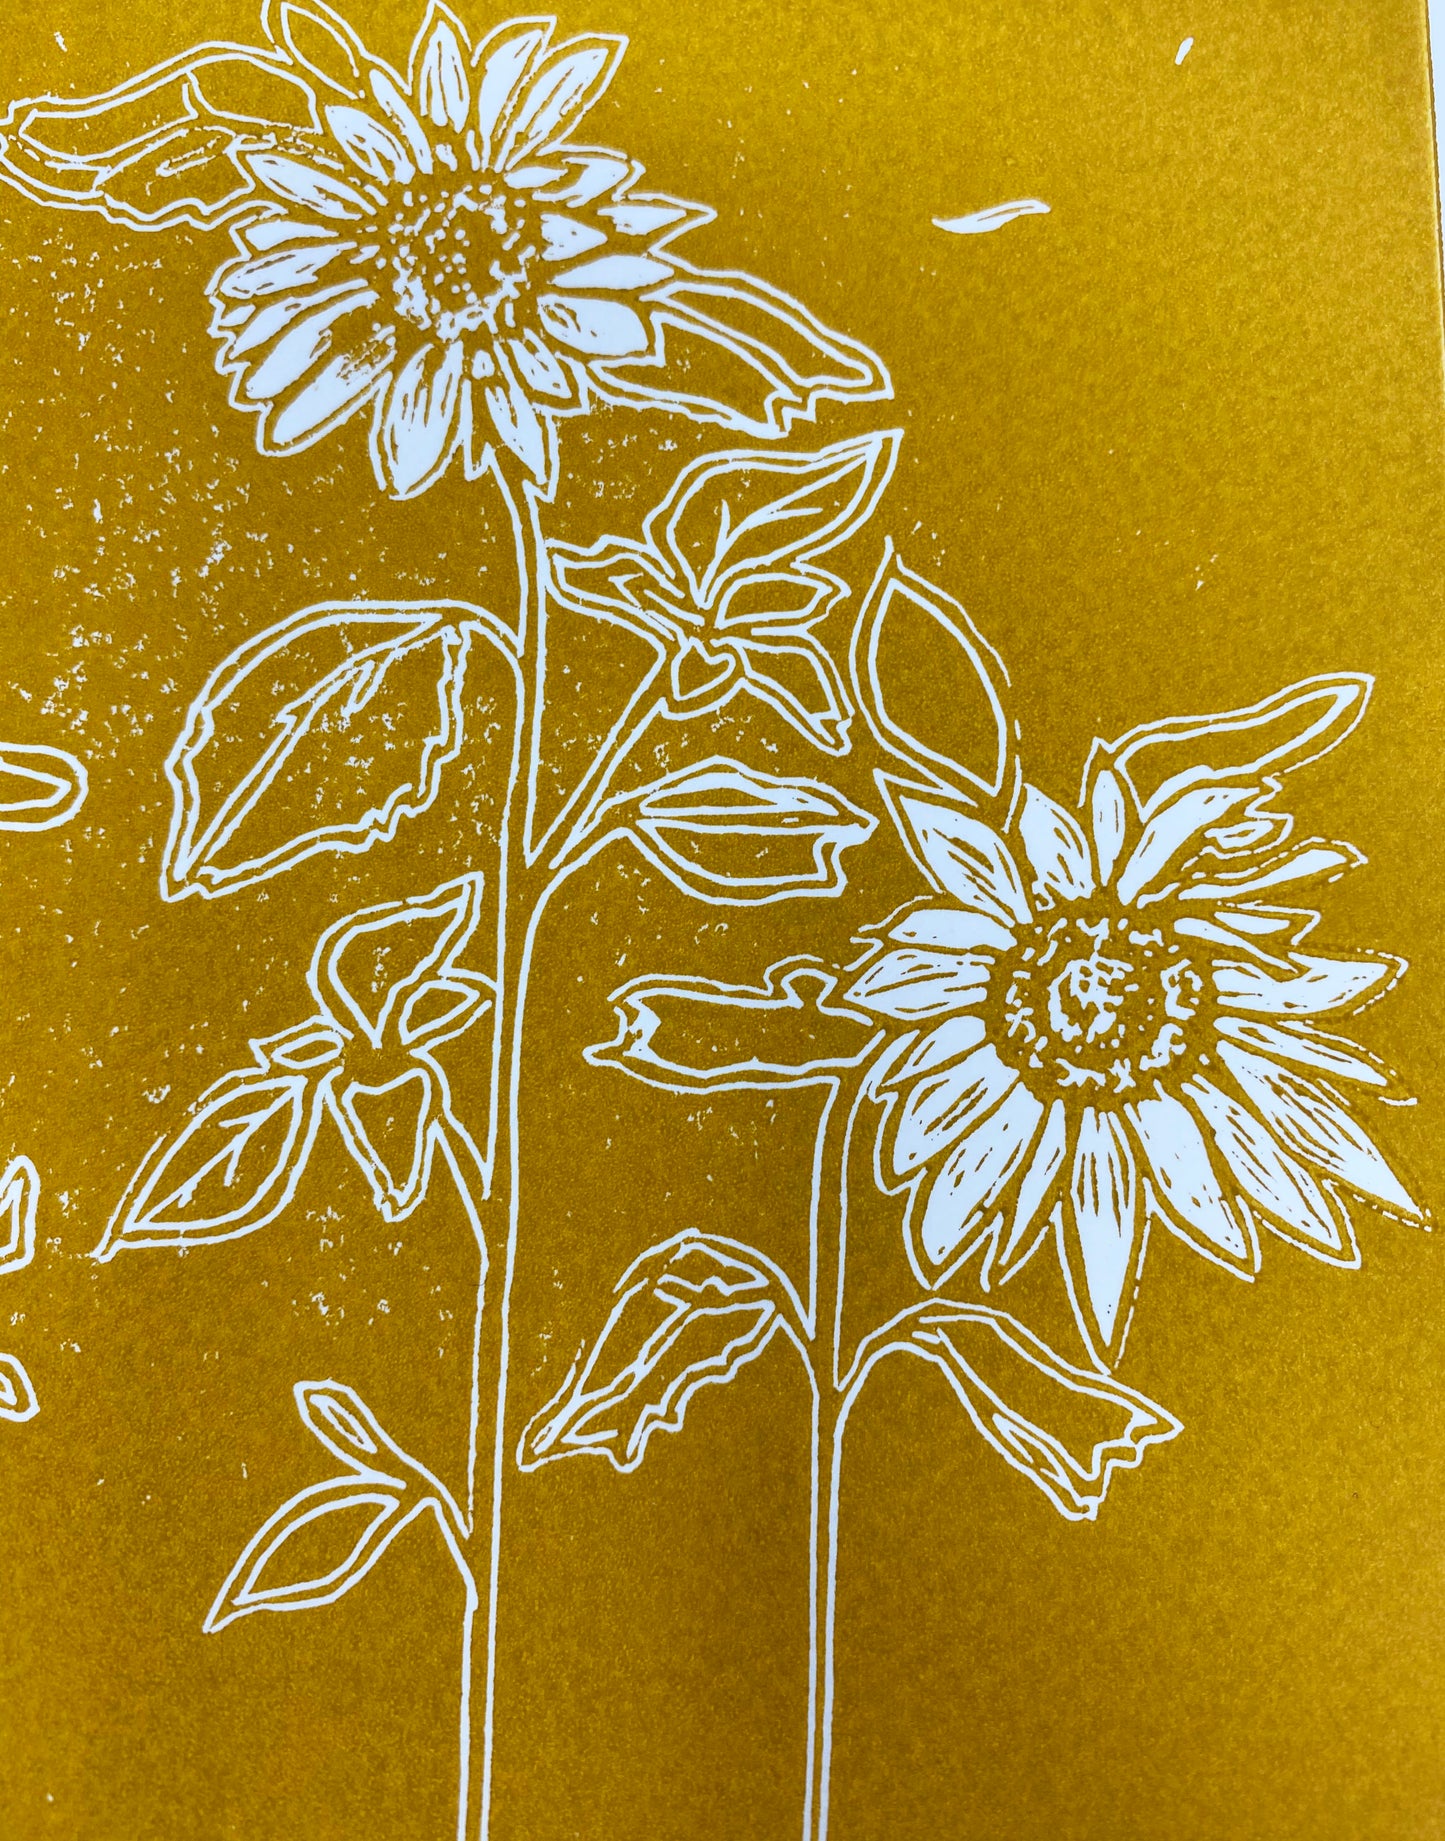 Sunflower Family Lino cut print by LDMDesign